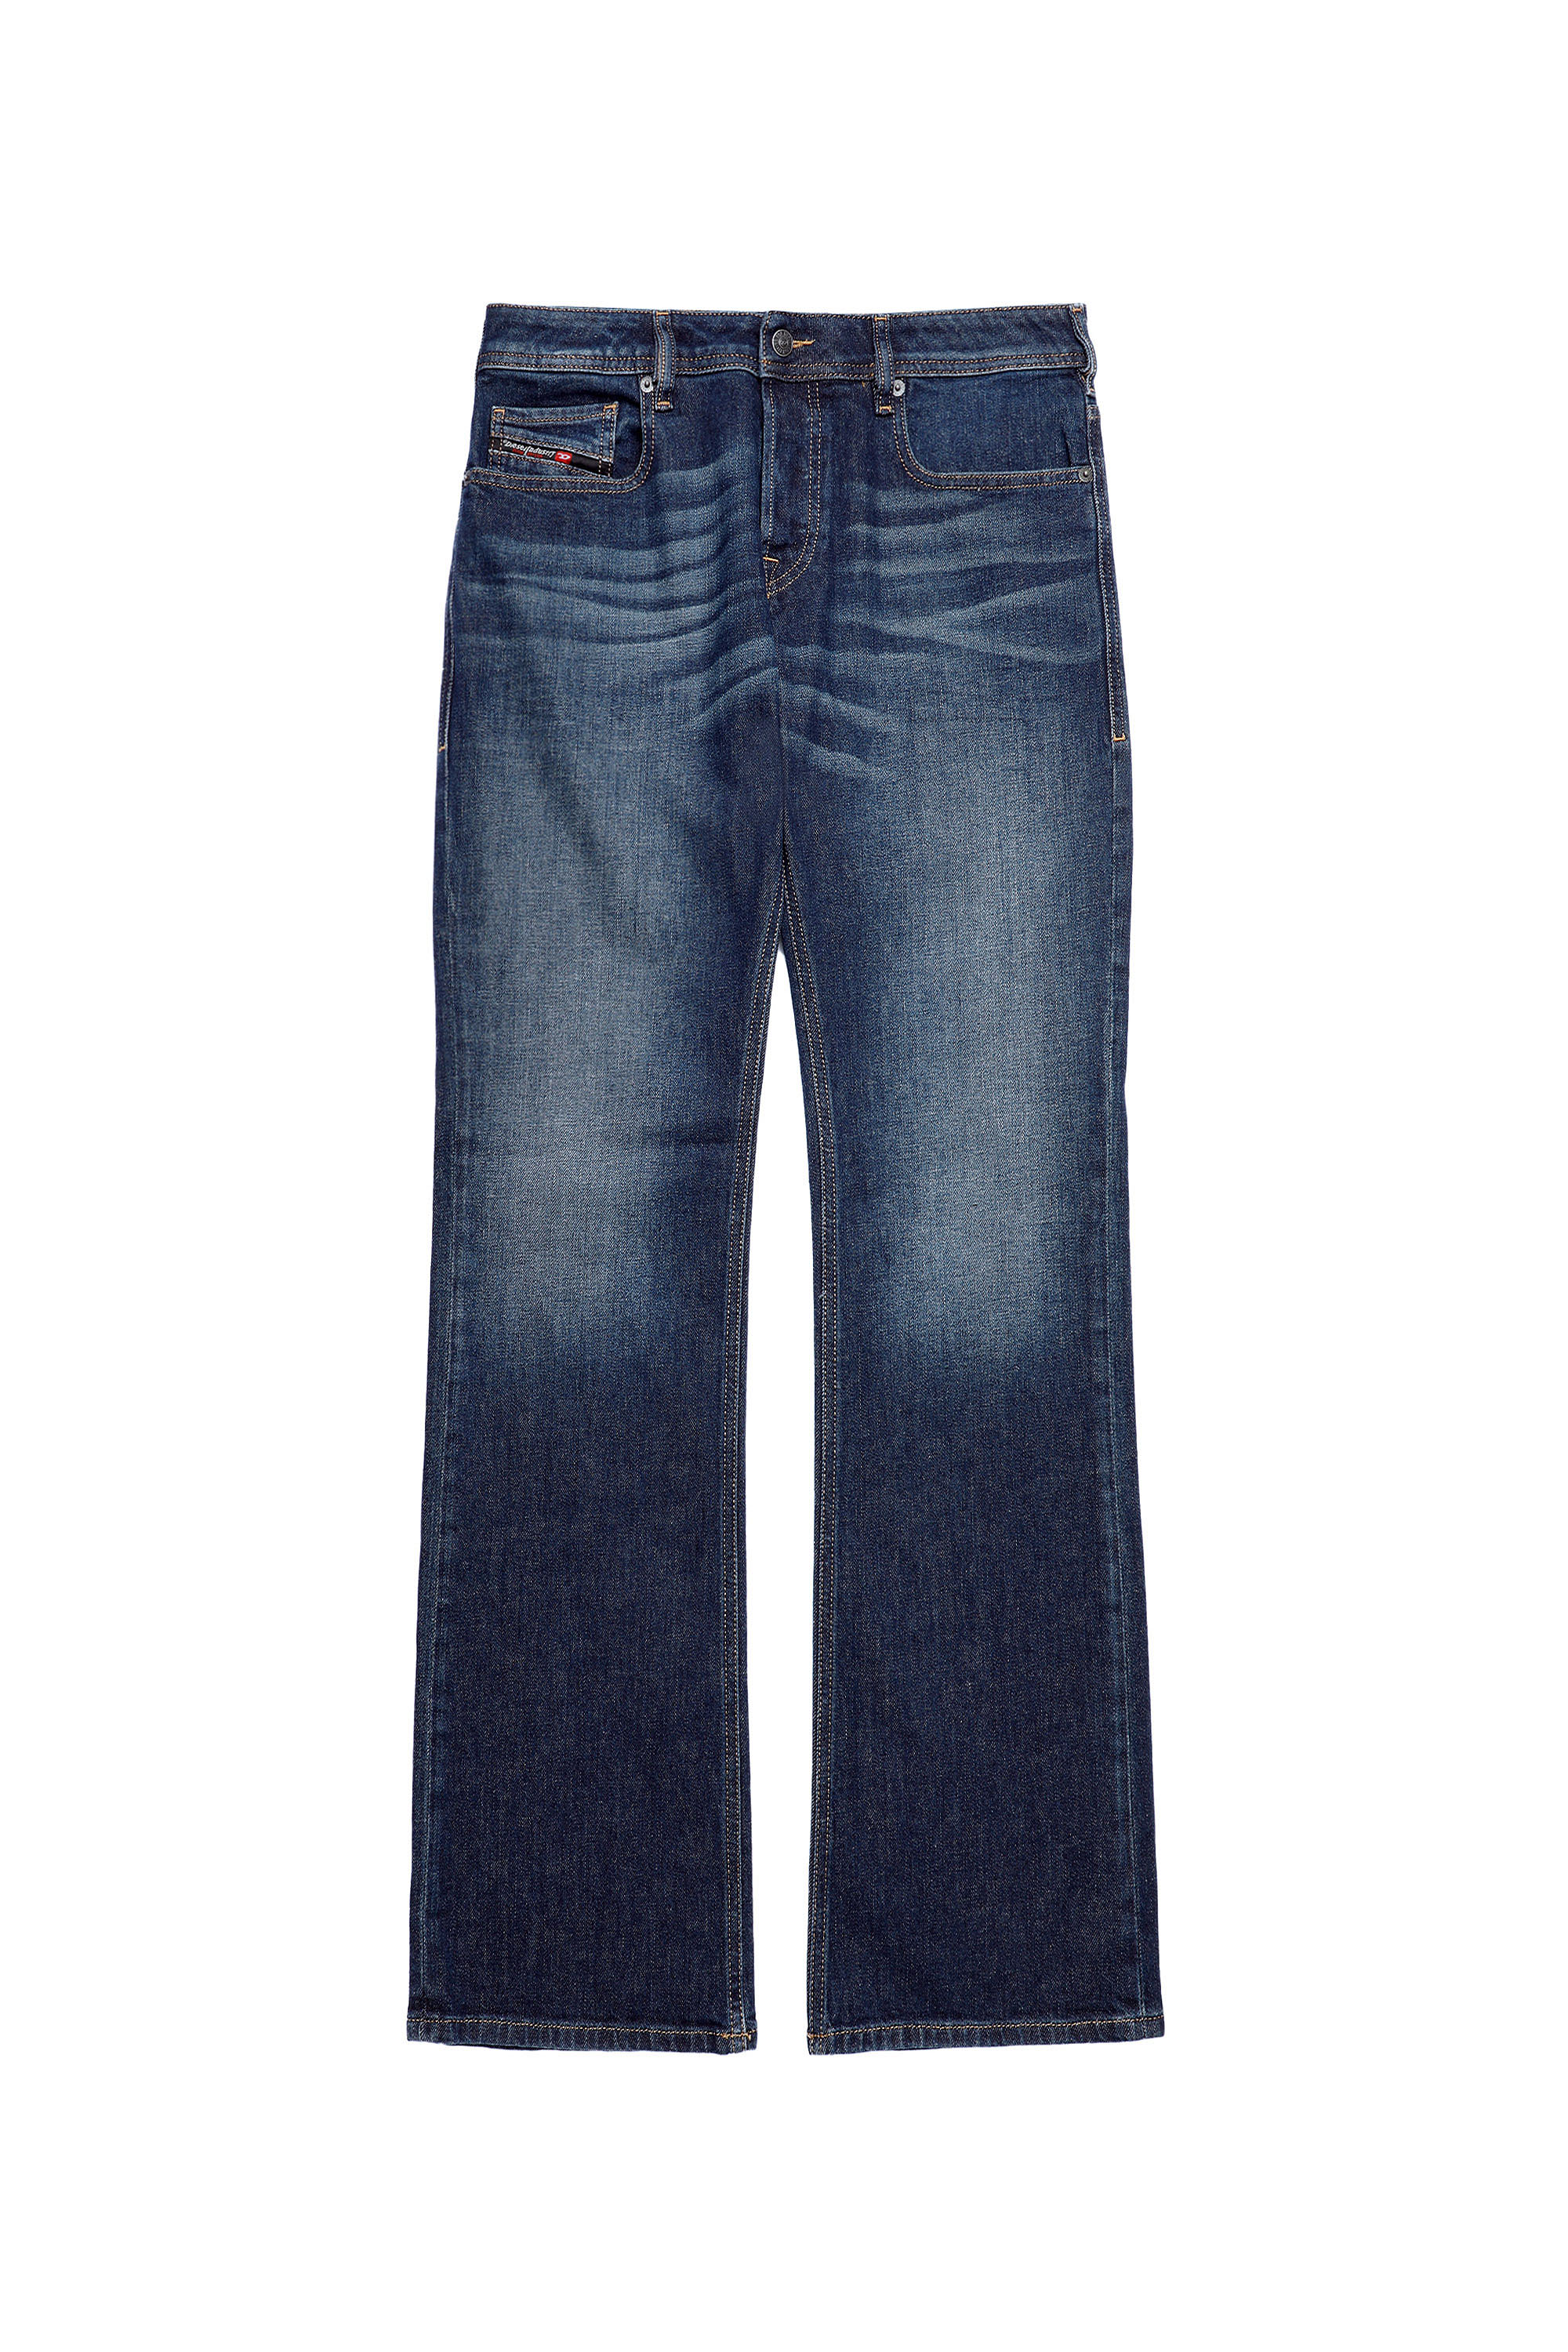 Diesel - Zatiny 009HN Bootcut Jeans,  - Image 6